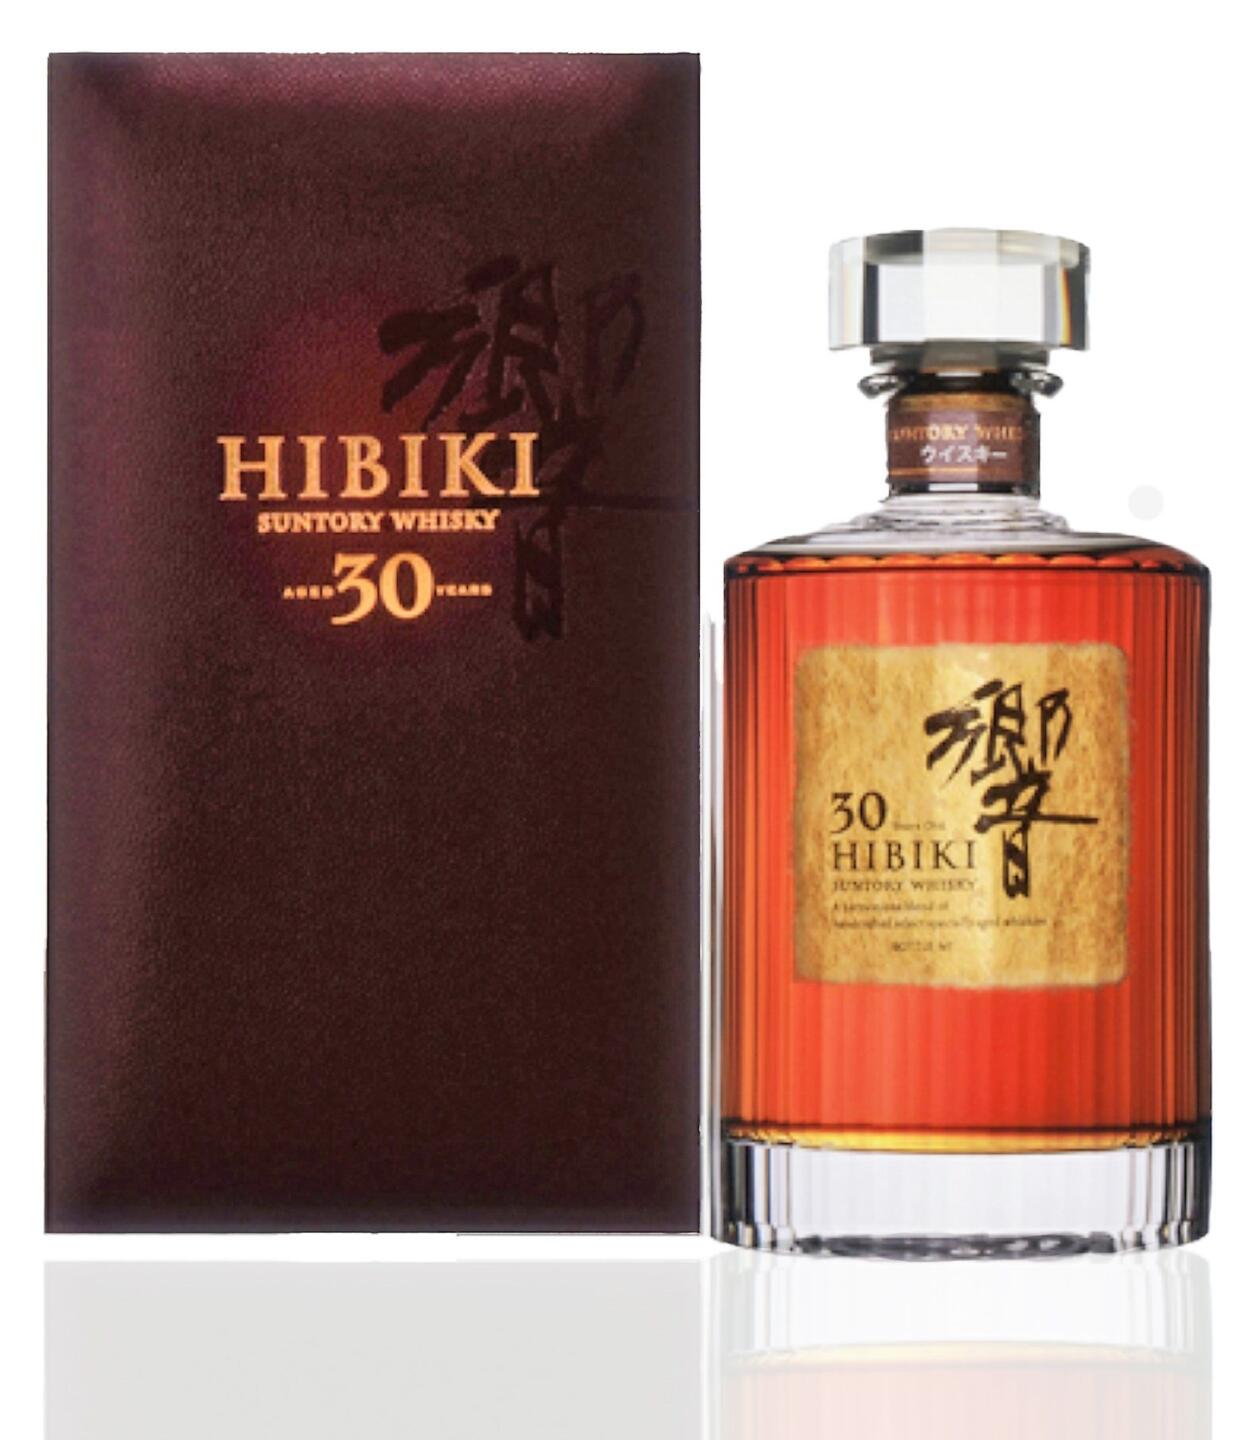 Inaizumi виски. Виски Suntory, "Hibiki". Hibiki Suntory 30. Suntory Whisky Hibiki 30 years old. Японский виски Сантори.